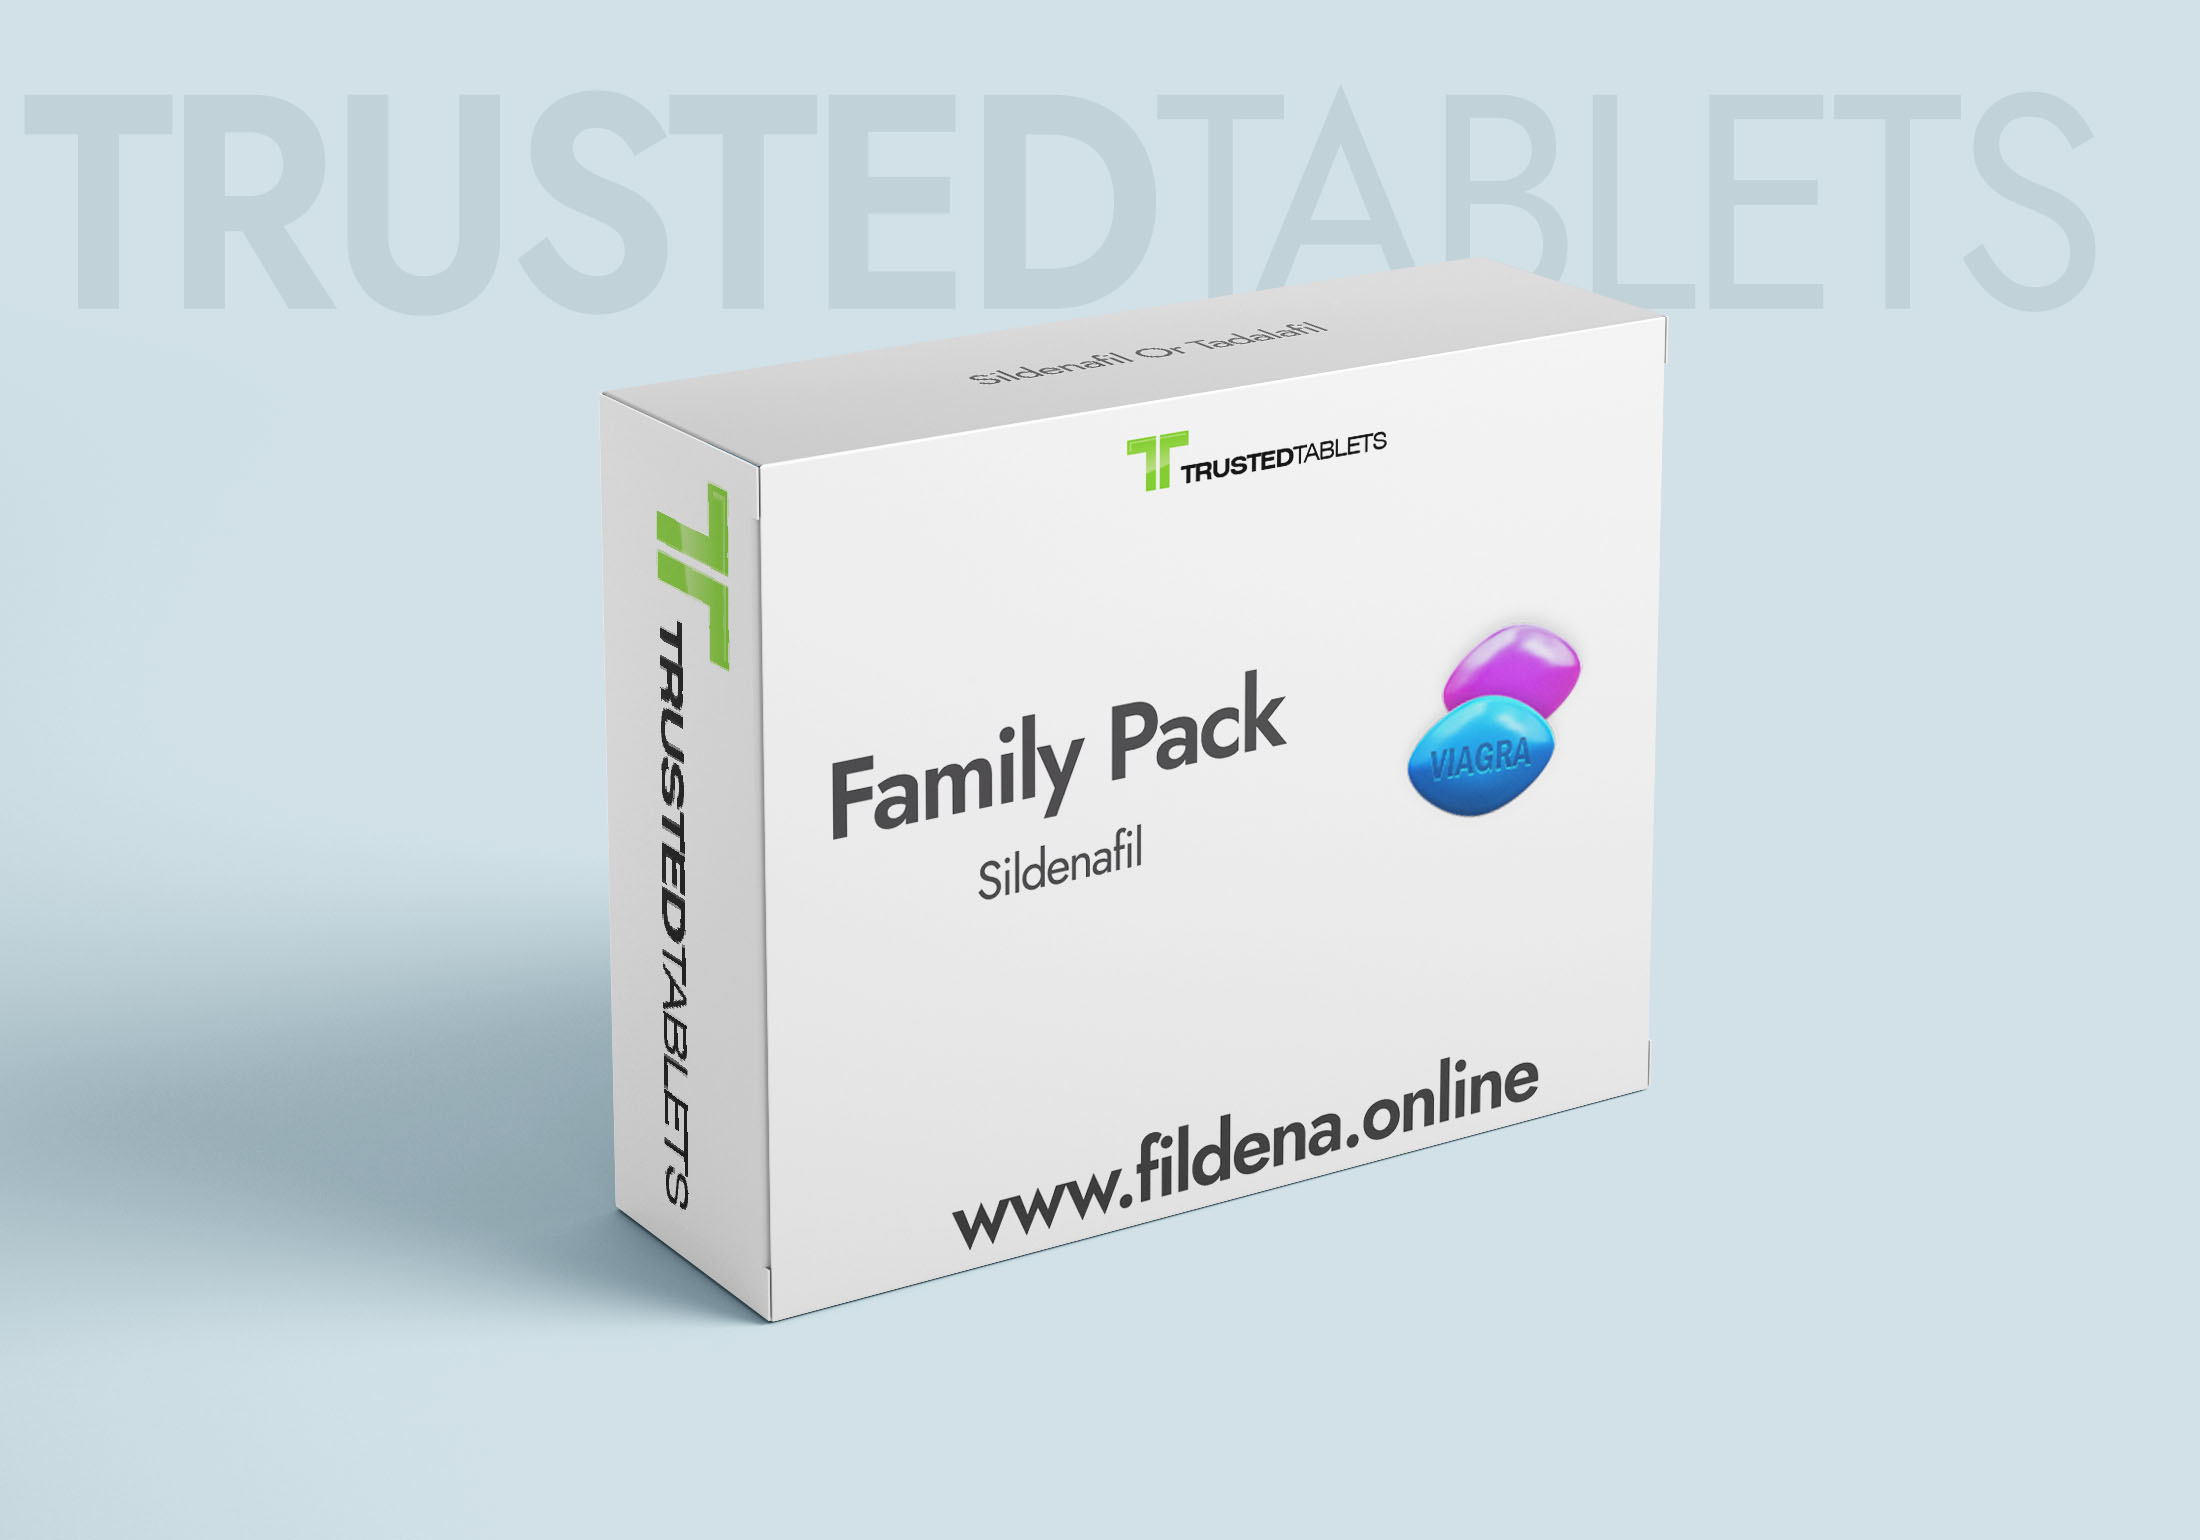 Family Pack TrustedTablets